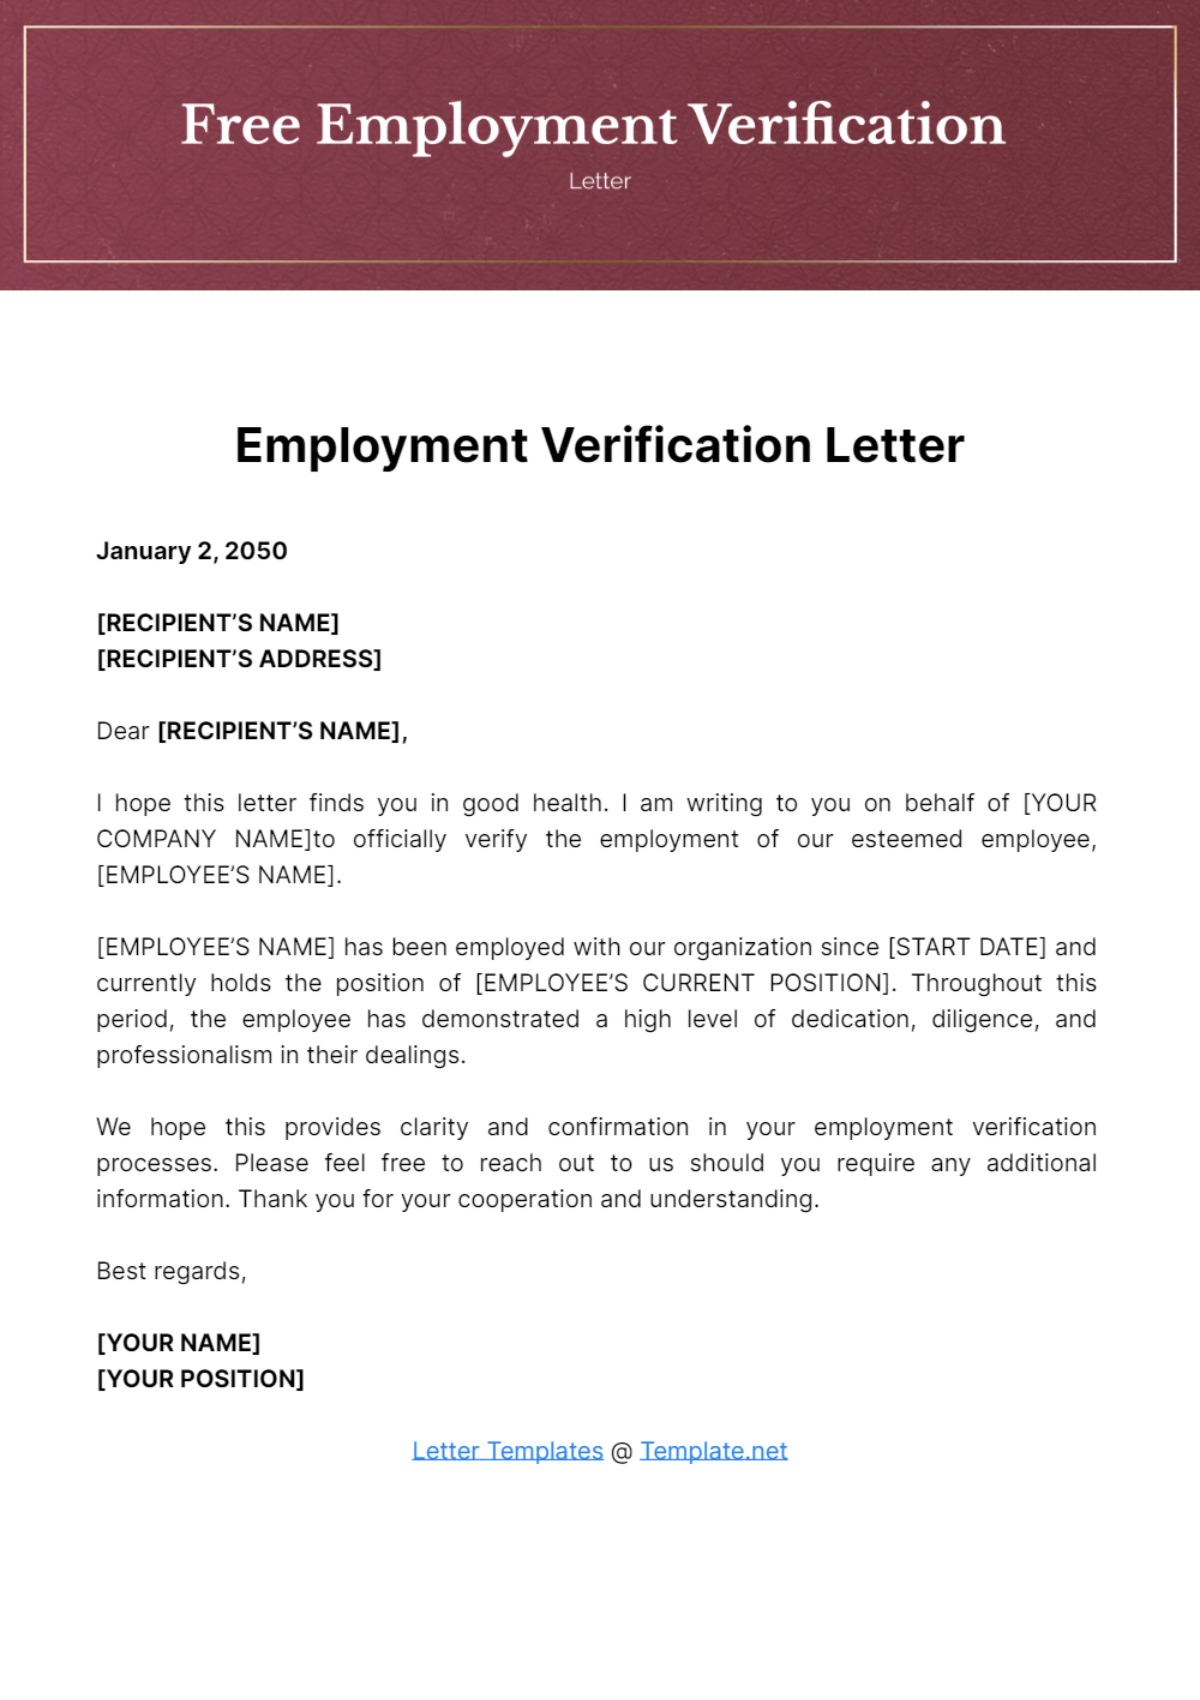 Free Employment Verification Letter Template